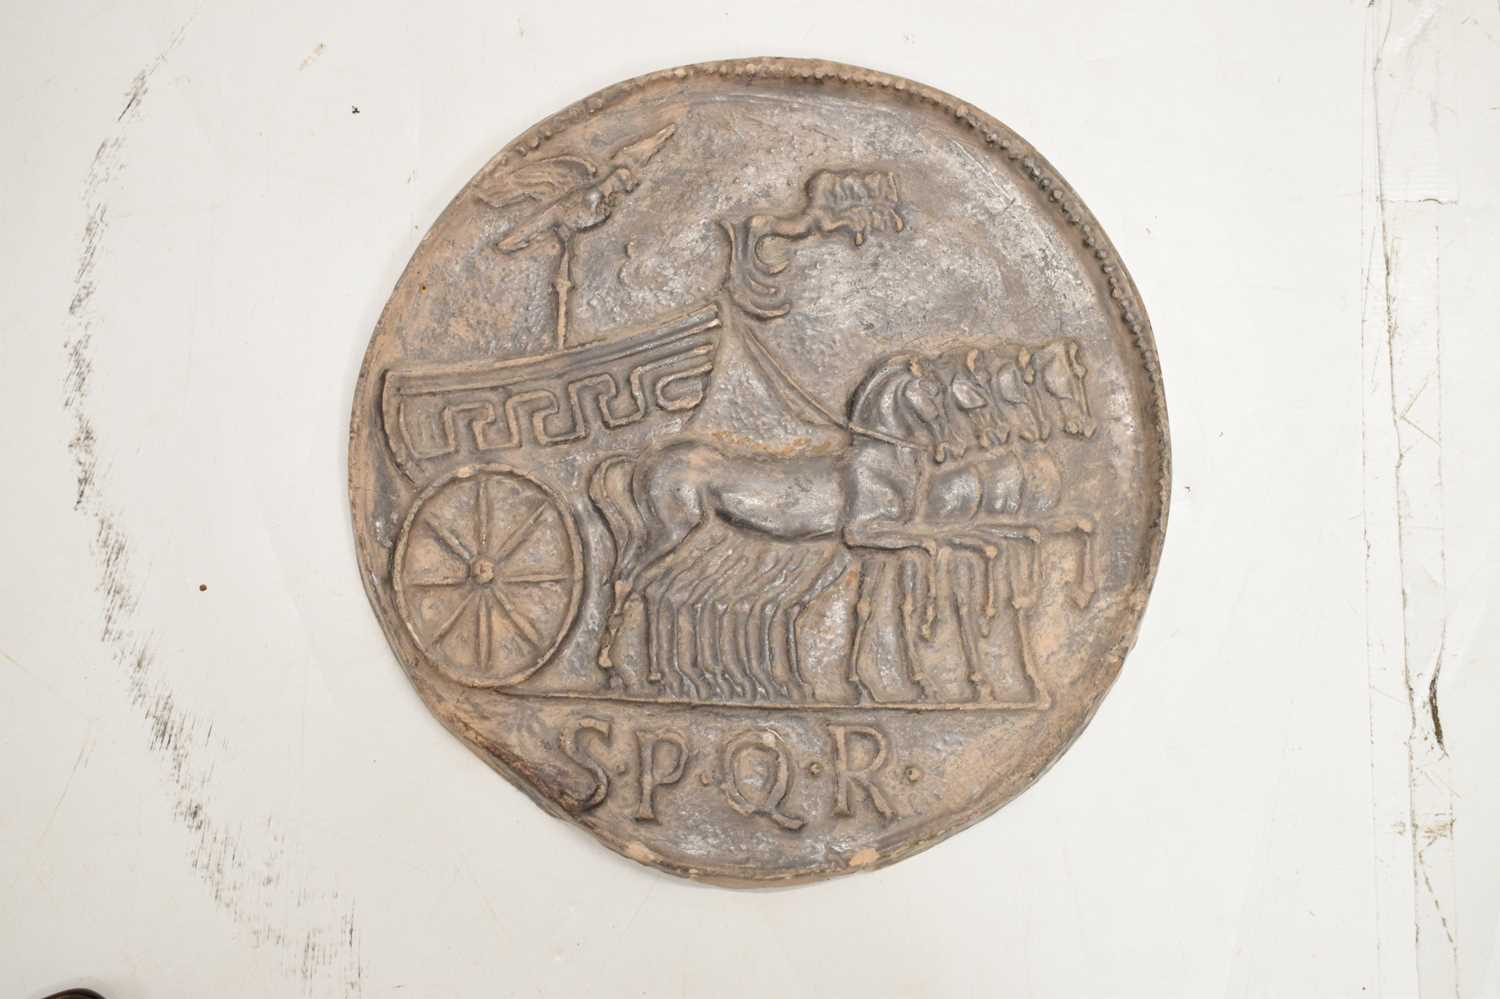 Roman-style plaster relief plaque after the Antique 'SPQR' - Image 3 of 6